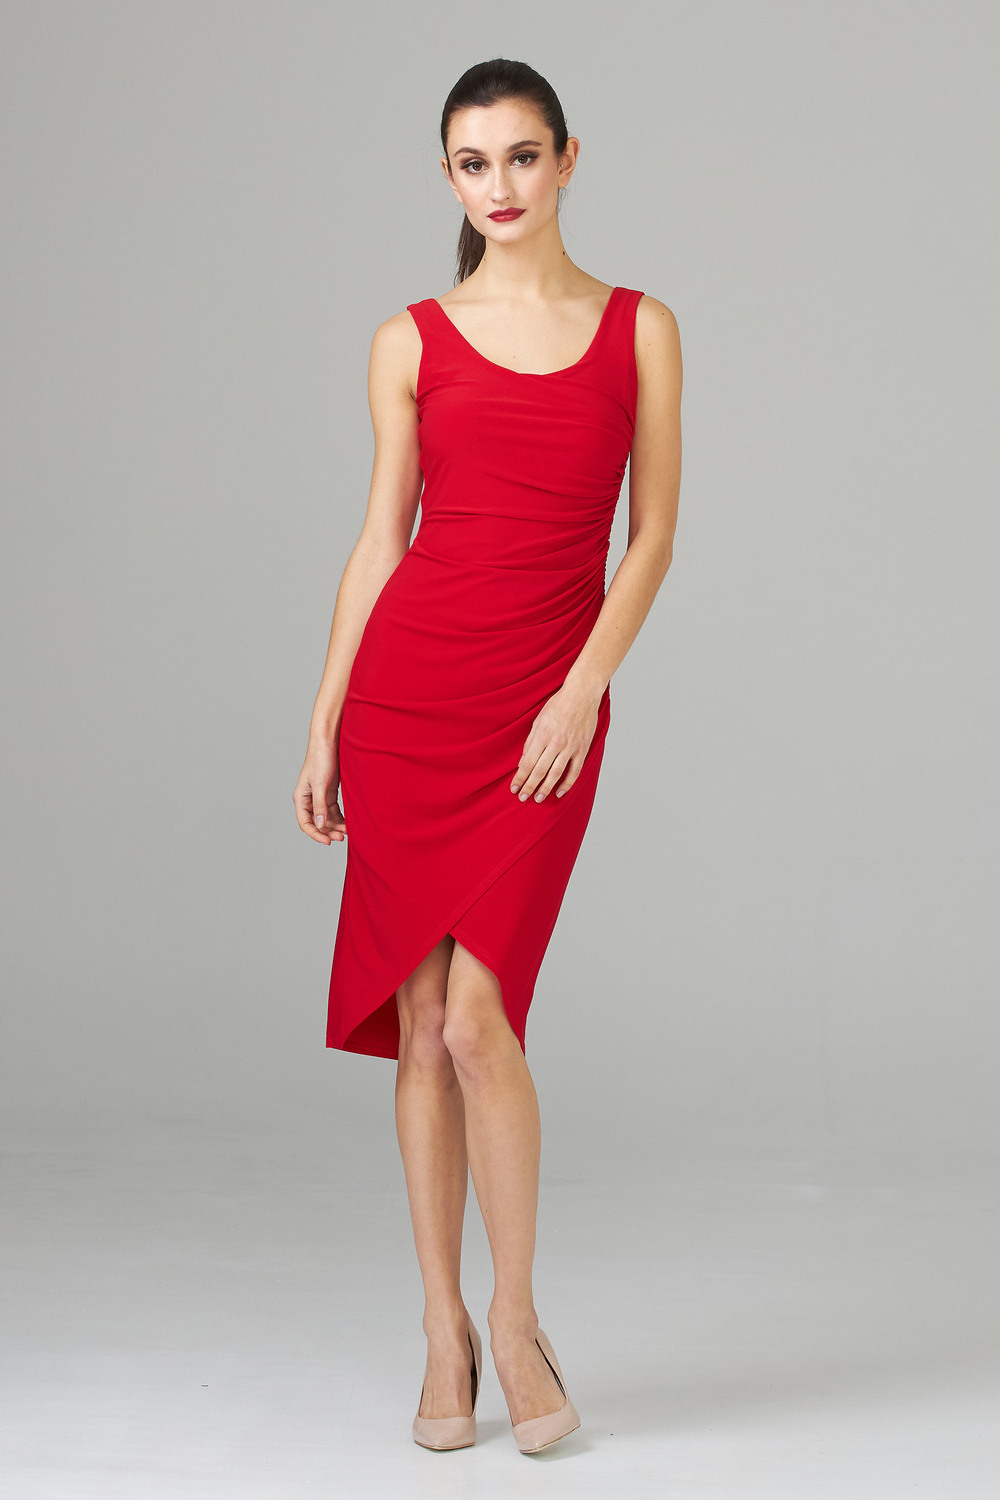 Joseph Ribkoff Dress Style 201189. Lipstick Red 173